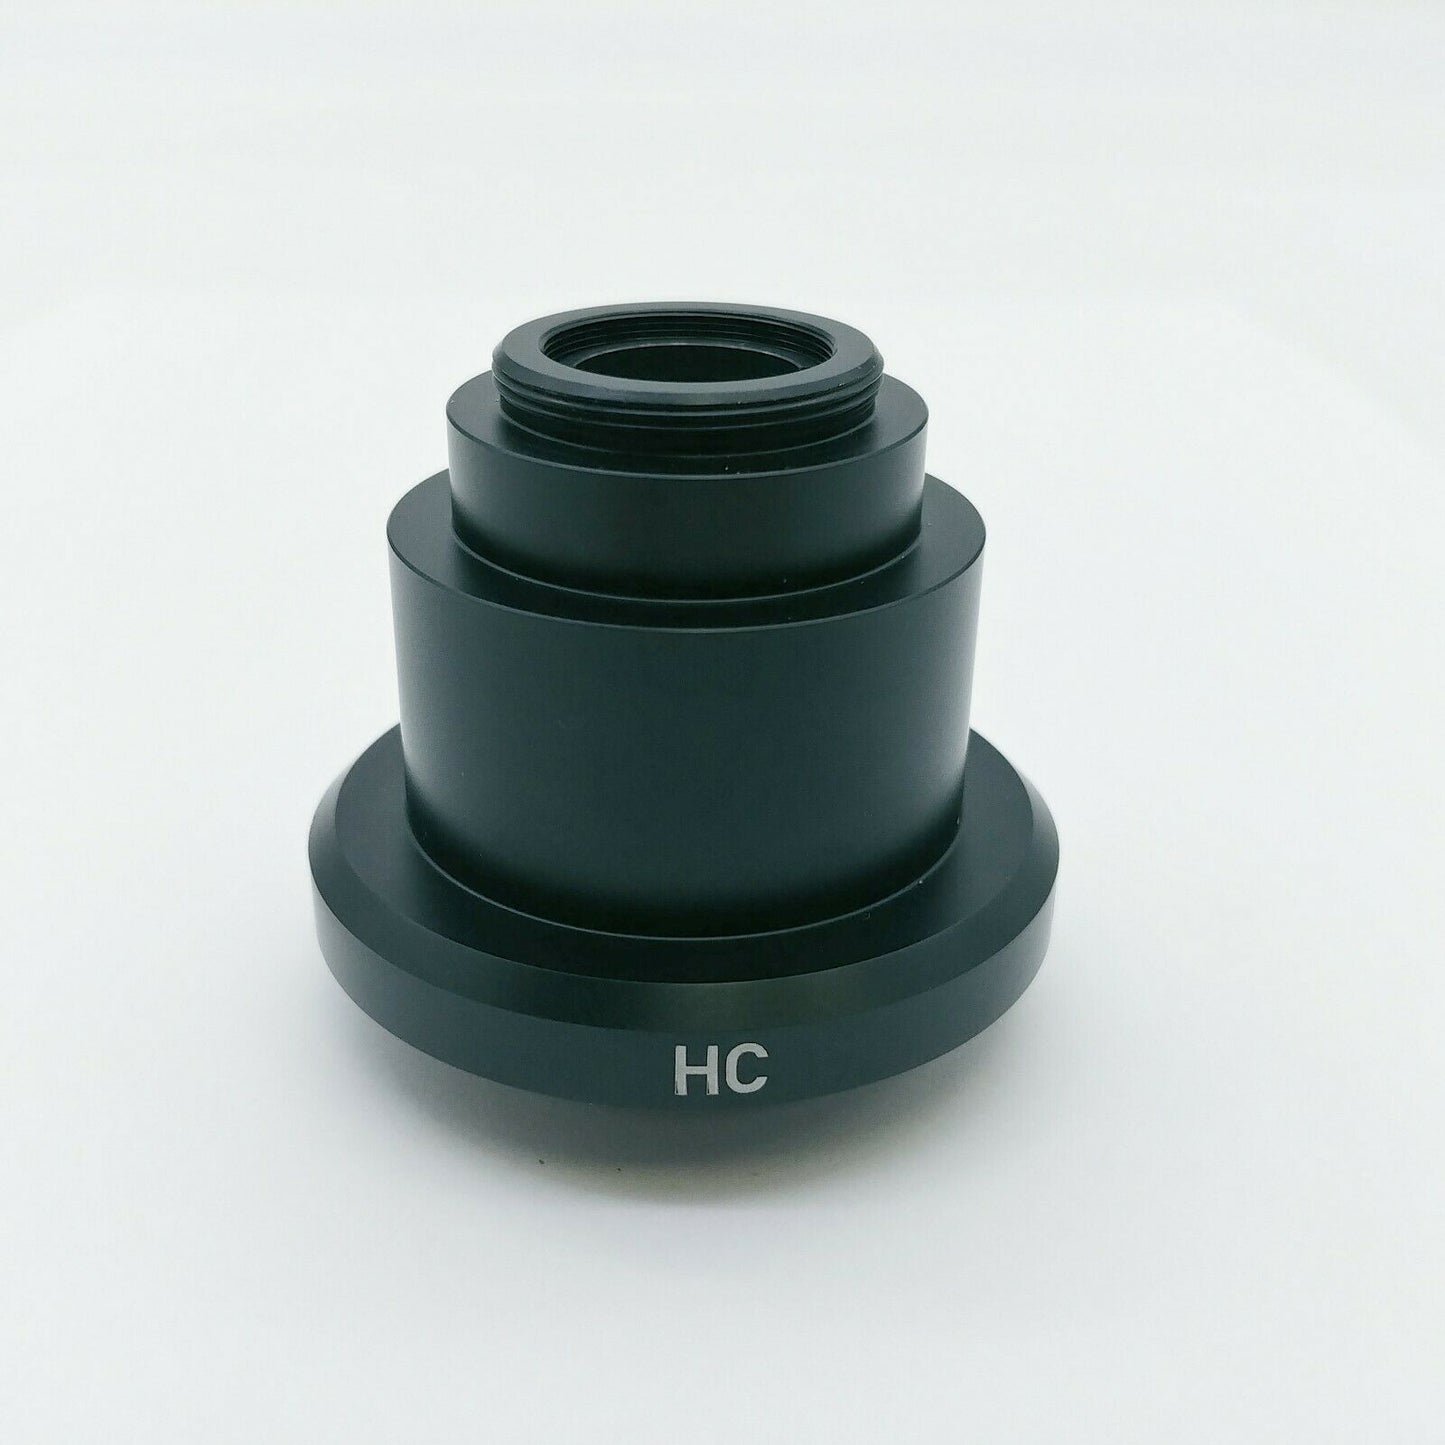 Leica Microscope Camera Adapter C-Mount 0.70x HC 13613707 - microscopemarketplace